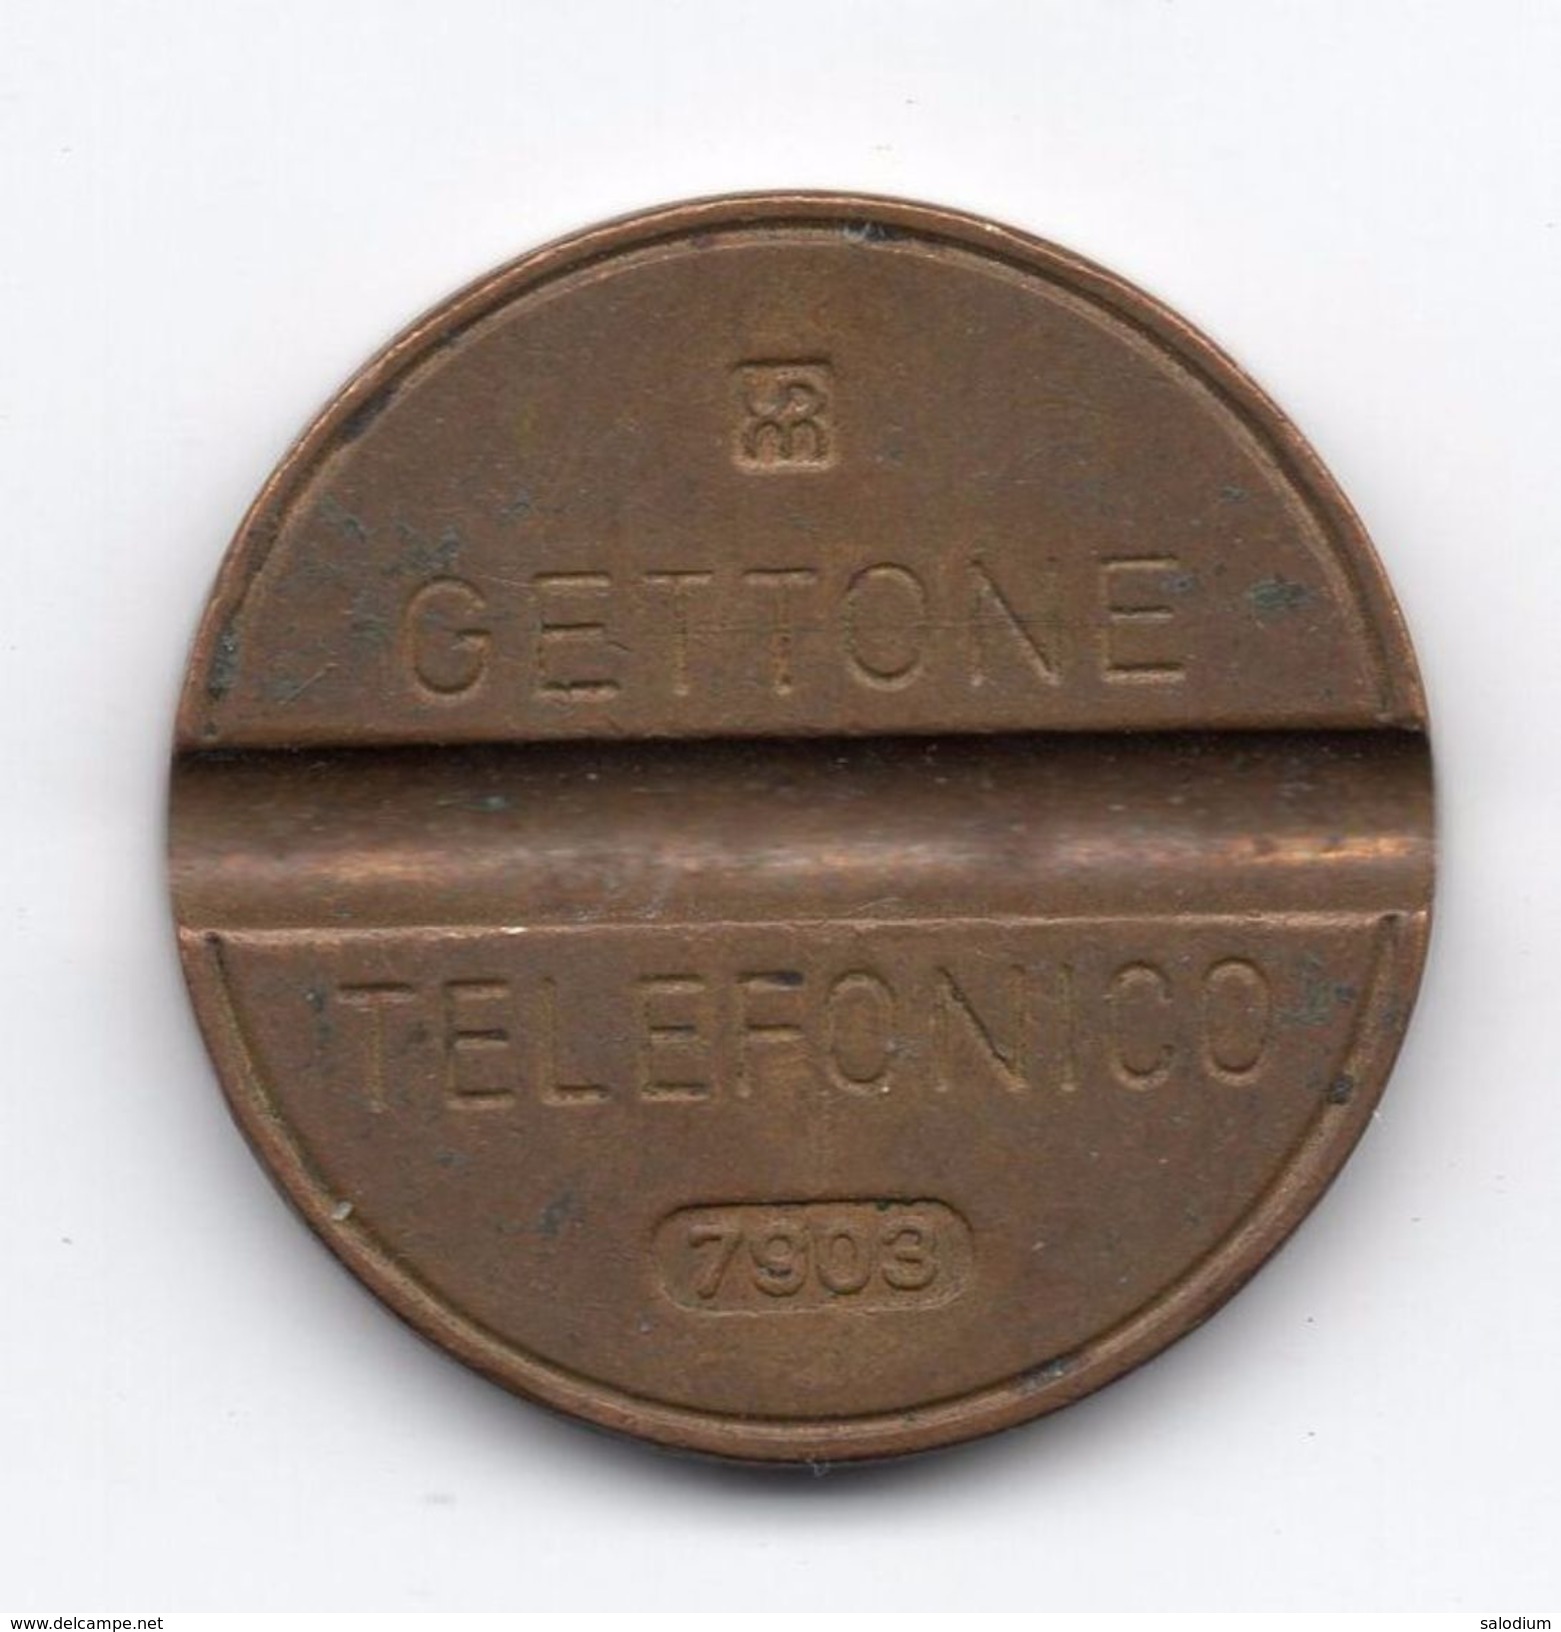 Gettone Telefonico 7903 Token Telephone - (Id-757) - Firma's